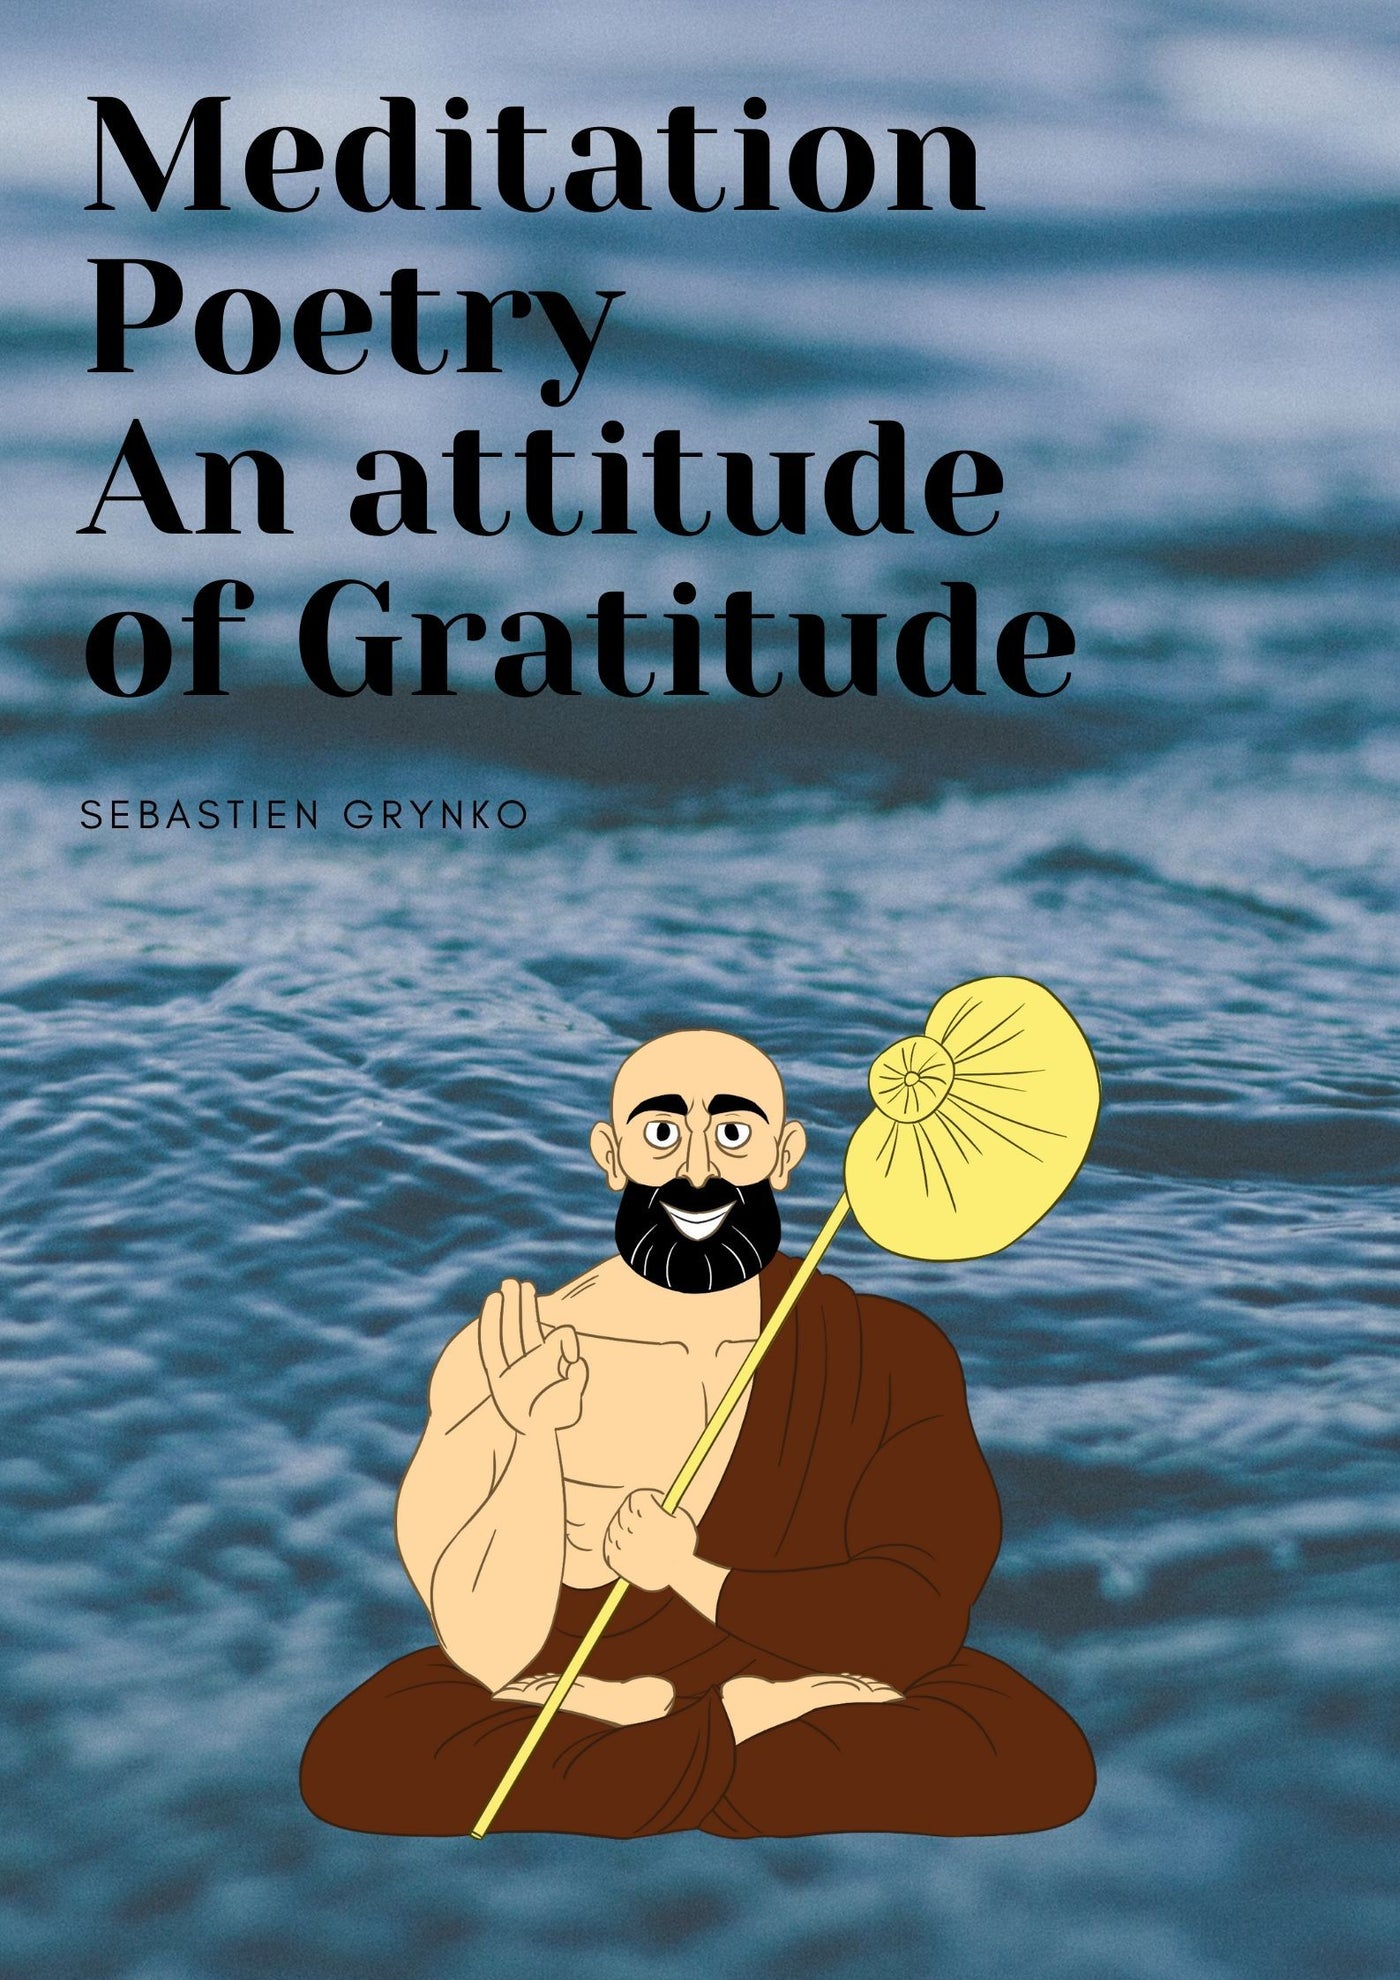 Meditation poetry - An attitude of gratitude